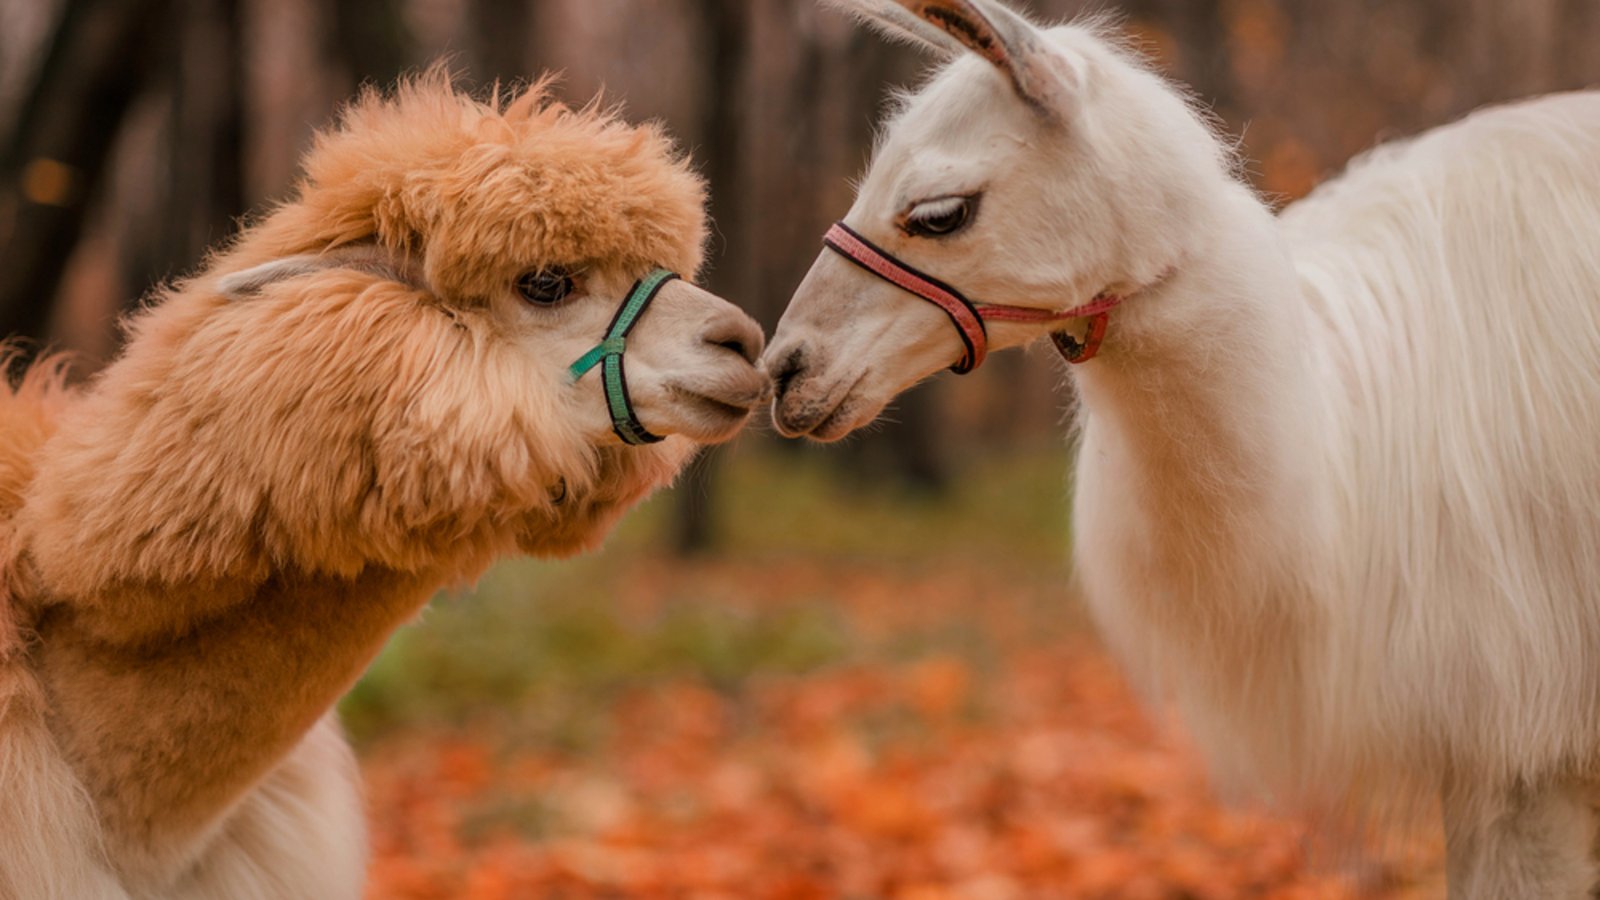 gehören zu den beliebten Tieren: Lamas und Alpakas.Foto: Helen Iv / shutterstock.com